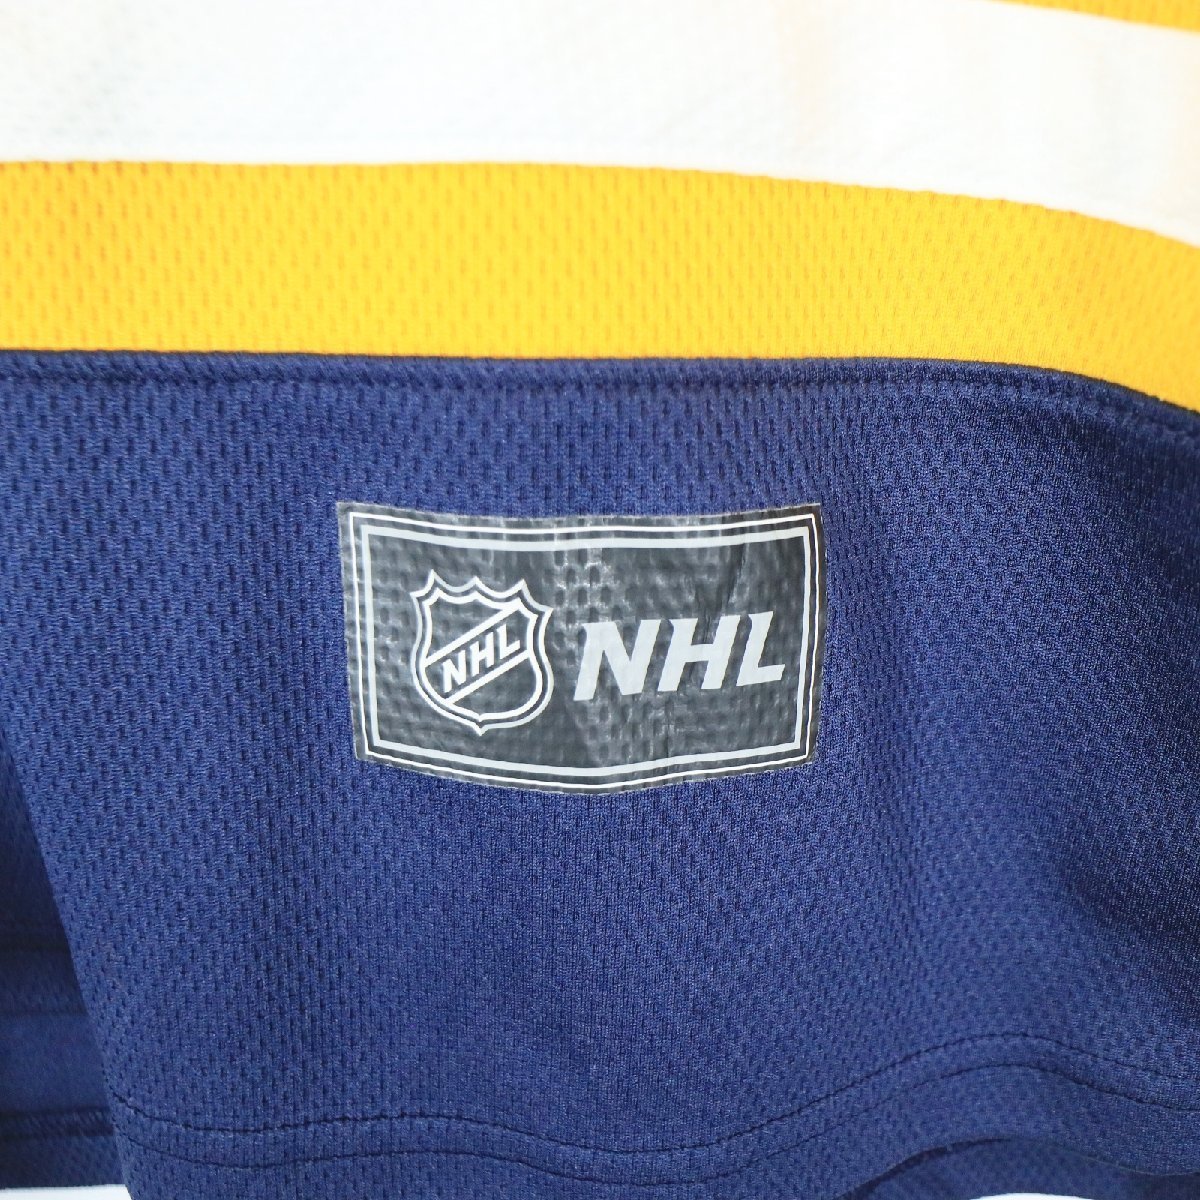 SALE///// UNKNOWN NHLnashu Bill * Predator z game shirt Pro team ice hockey sport yellow ( men's L ) N2782